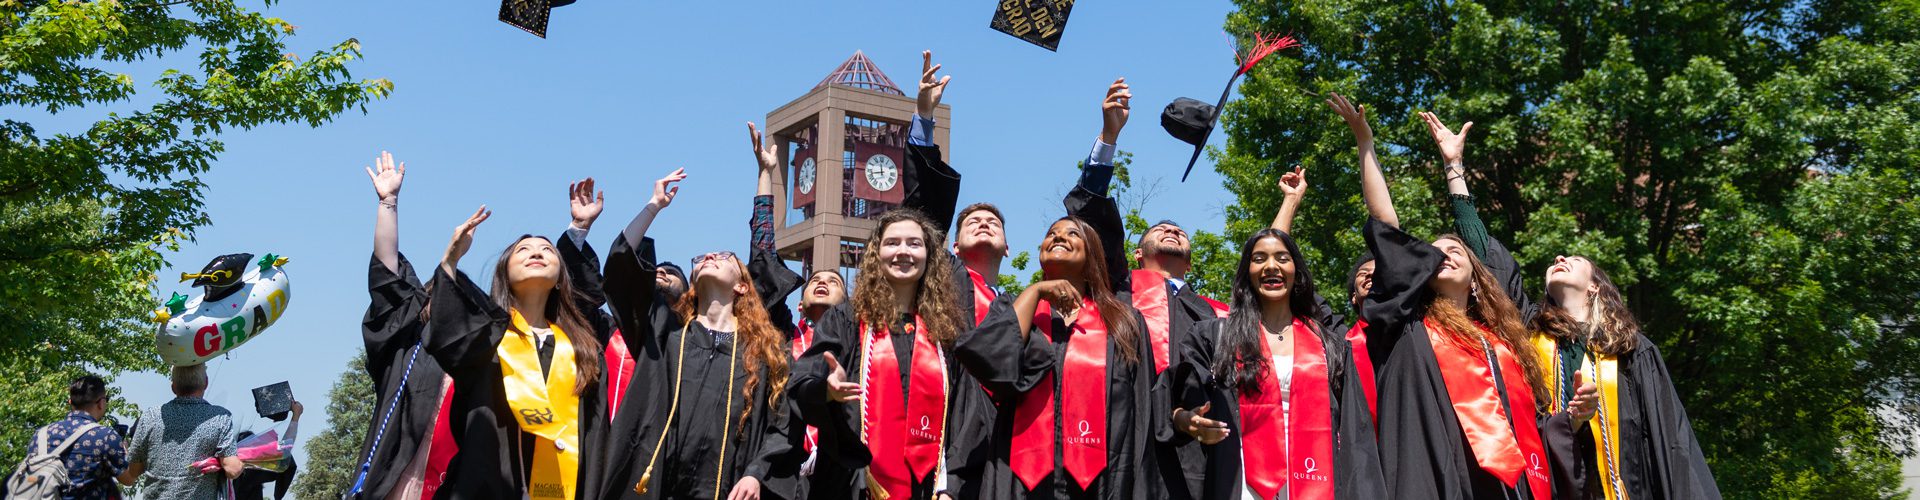 Jubilant Graduates throwing their caps in the air